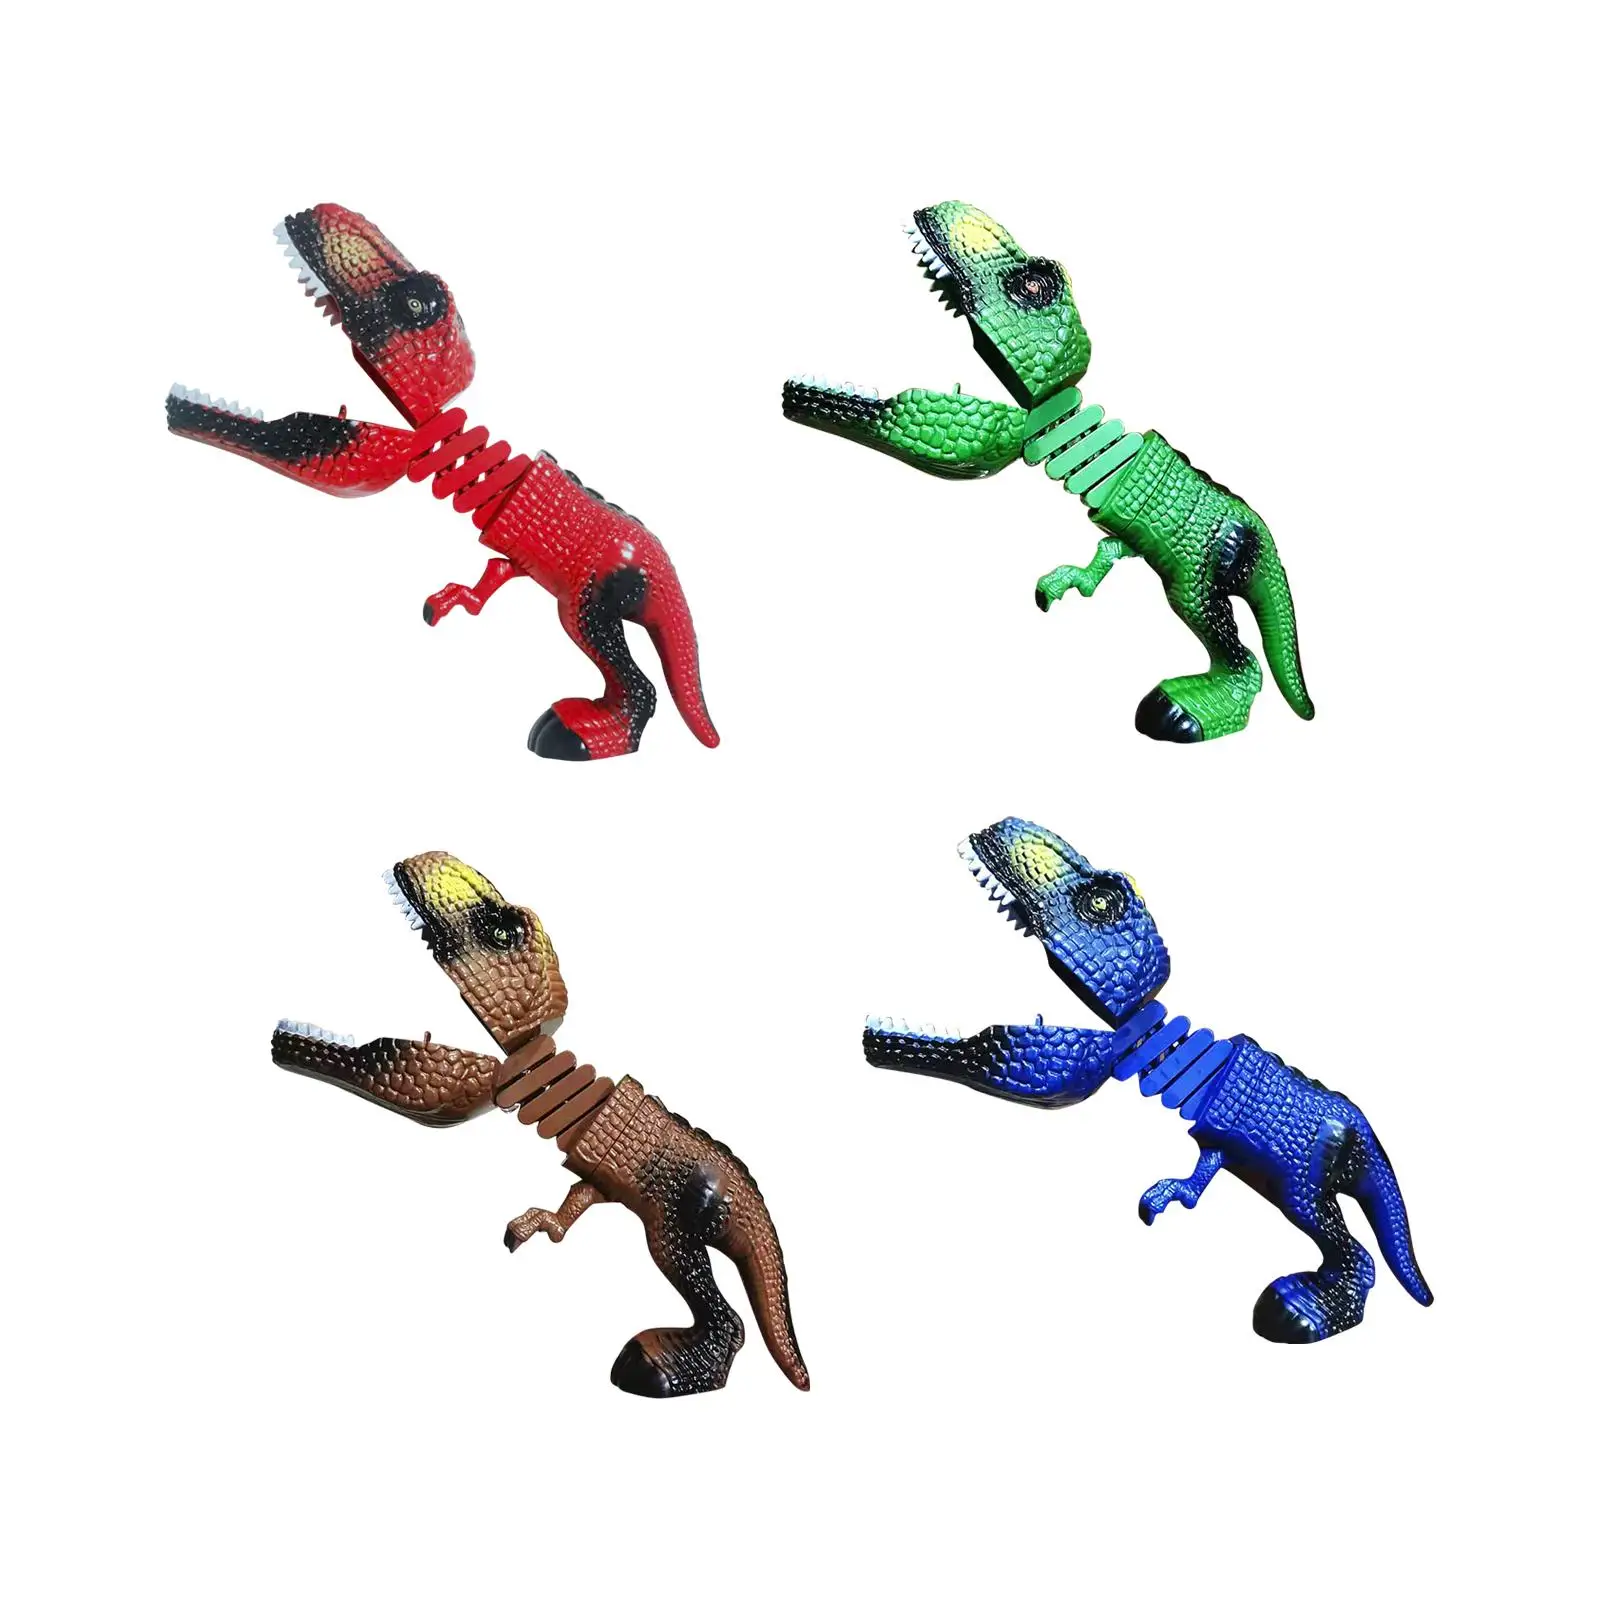 Dinosaur Animal Figures Early Learning Toy Reacher for Kids Boys Girls Gift